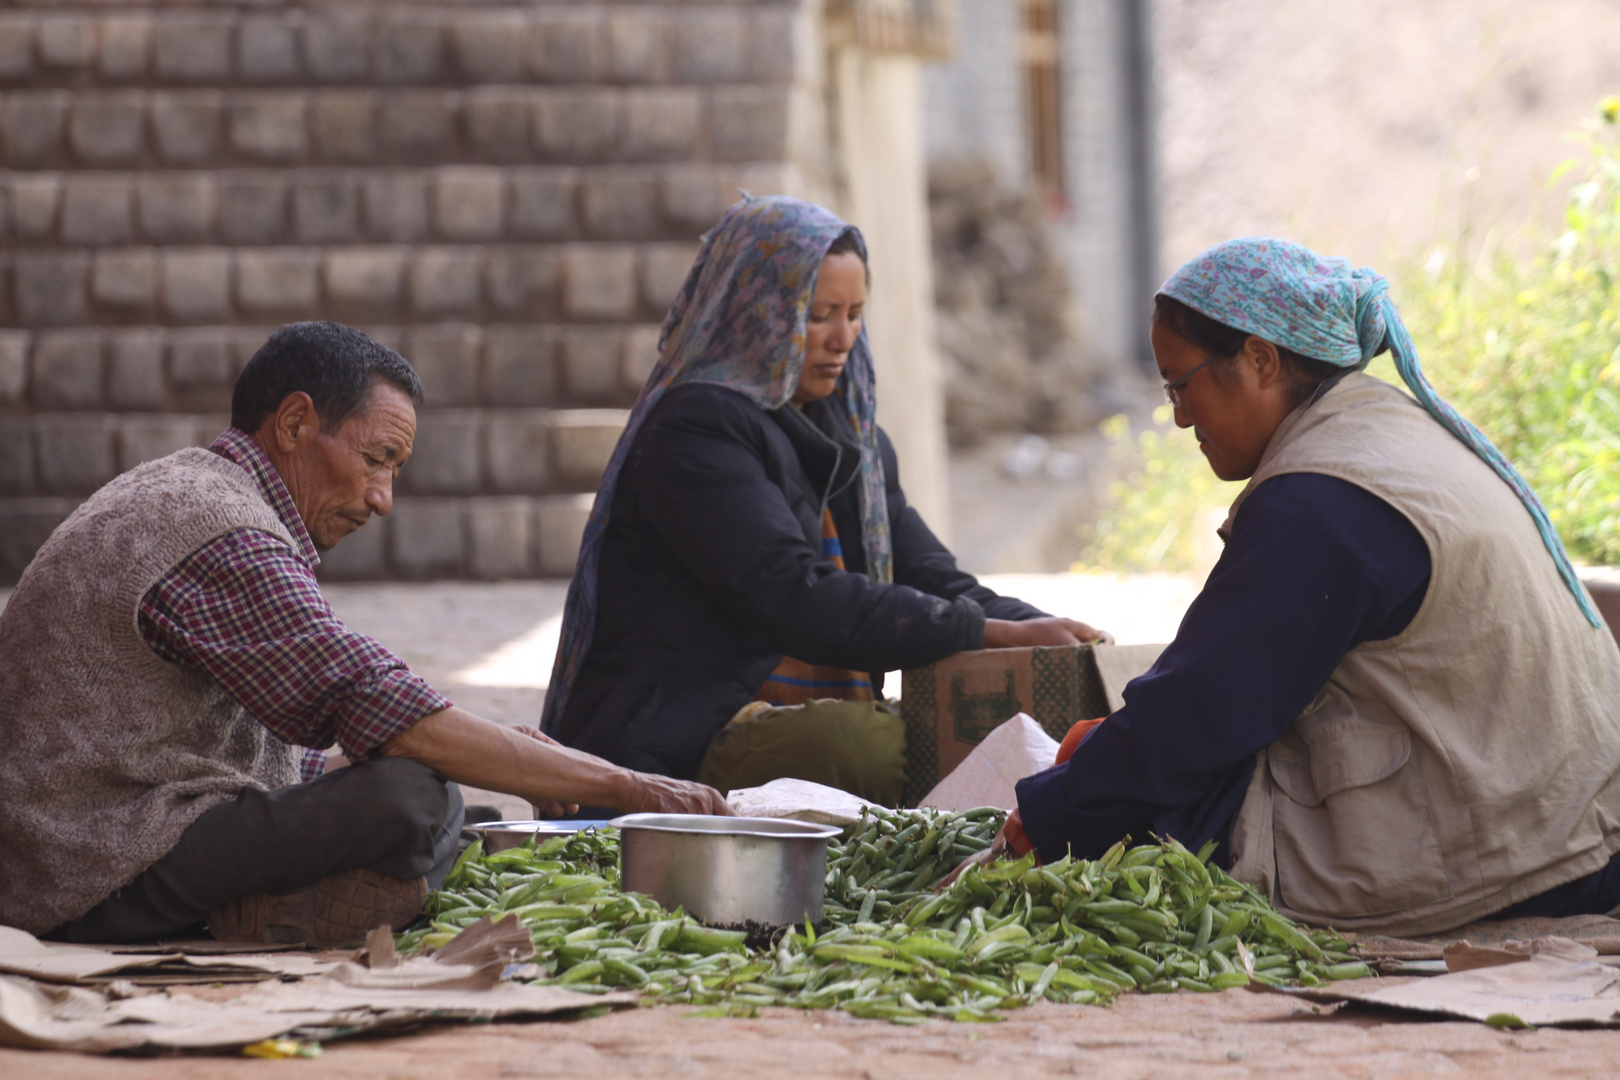 Phyang Monestary: Preparing food